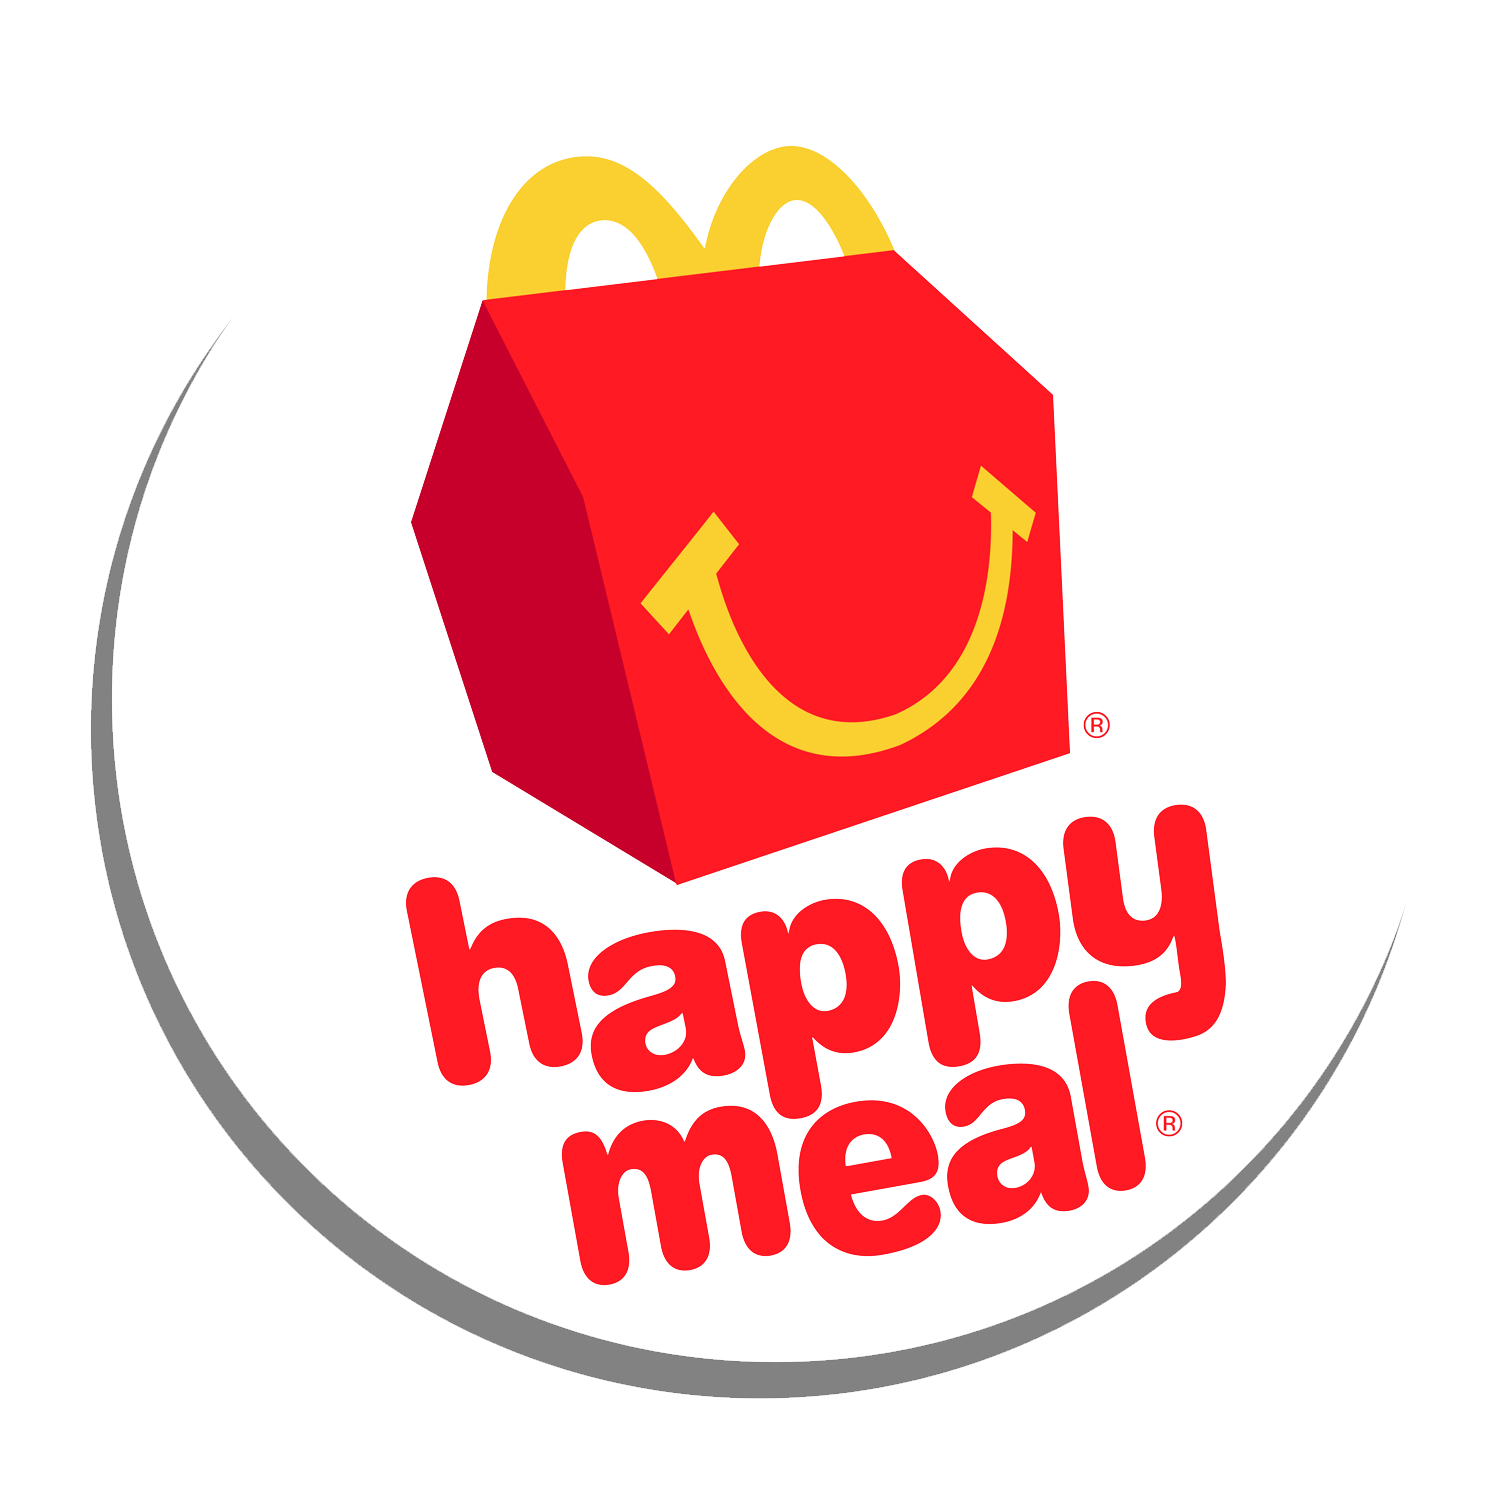 Hamburger Fries Mcdonald'S French Kids' Mcdonalds Meal Clipart